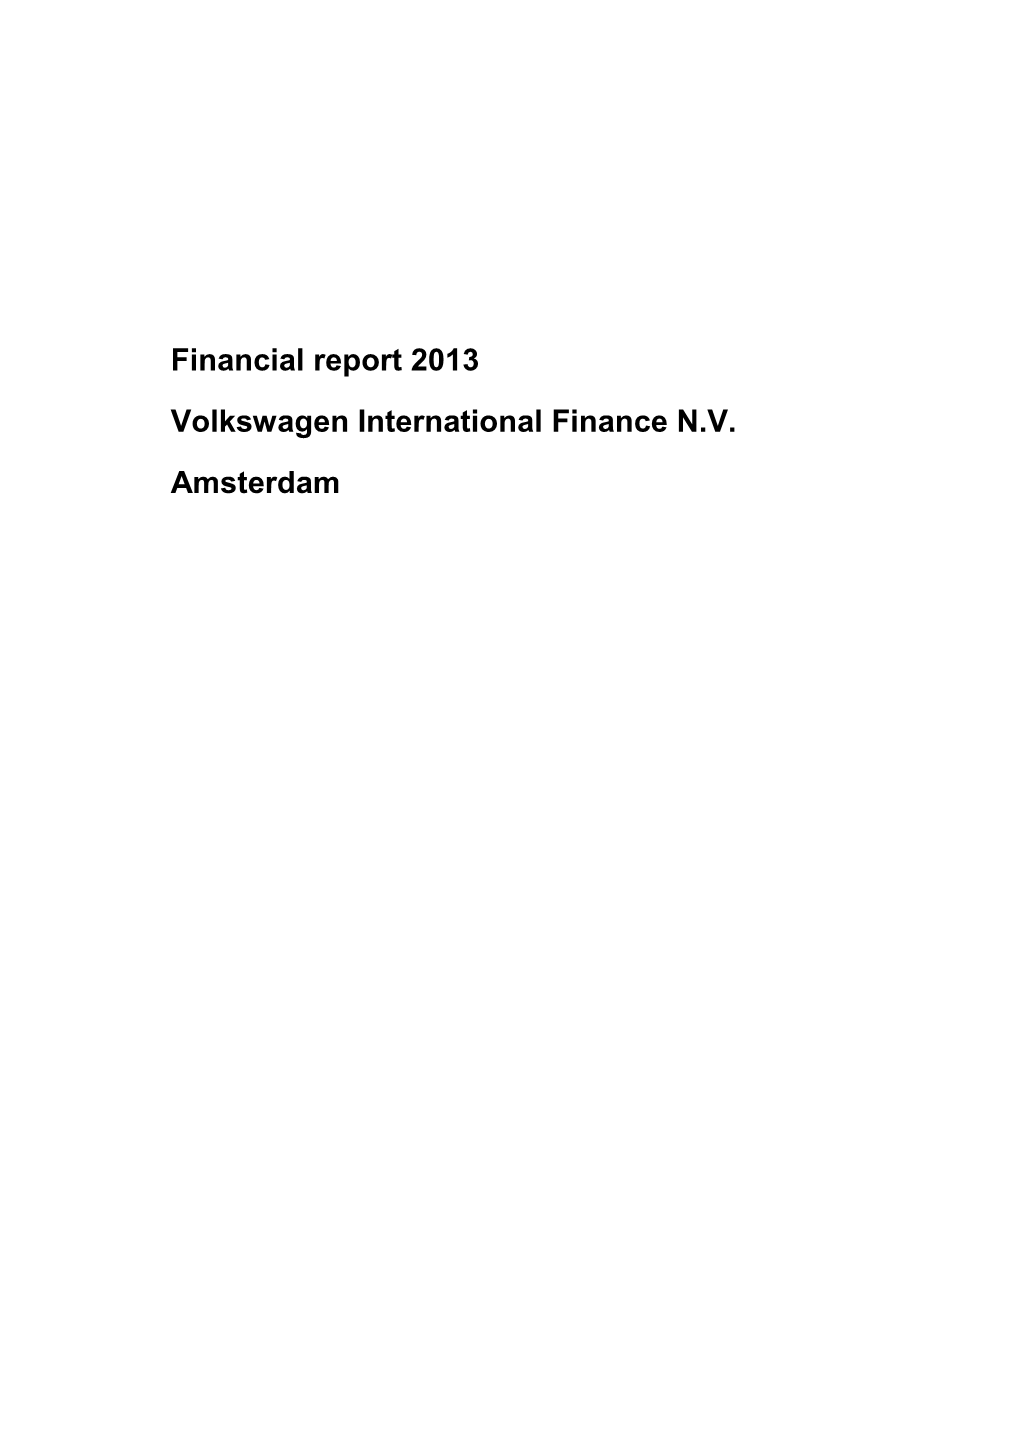 Financial Report 2013 Volkswagen International Finance N.V. Amsterdam Contents